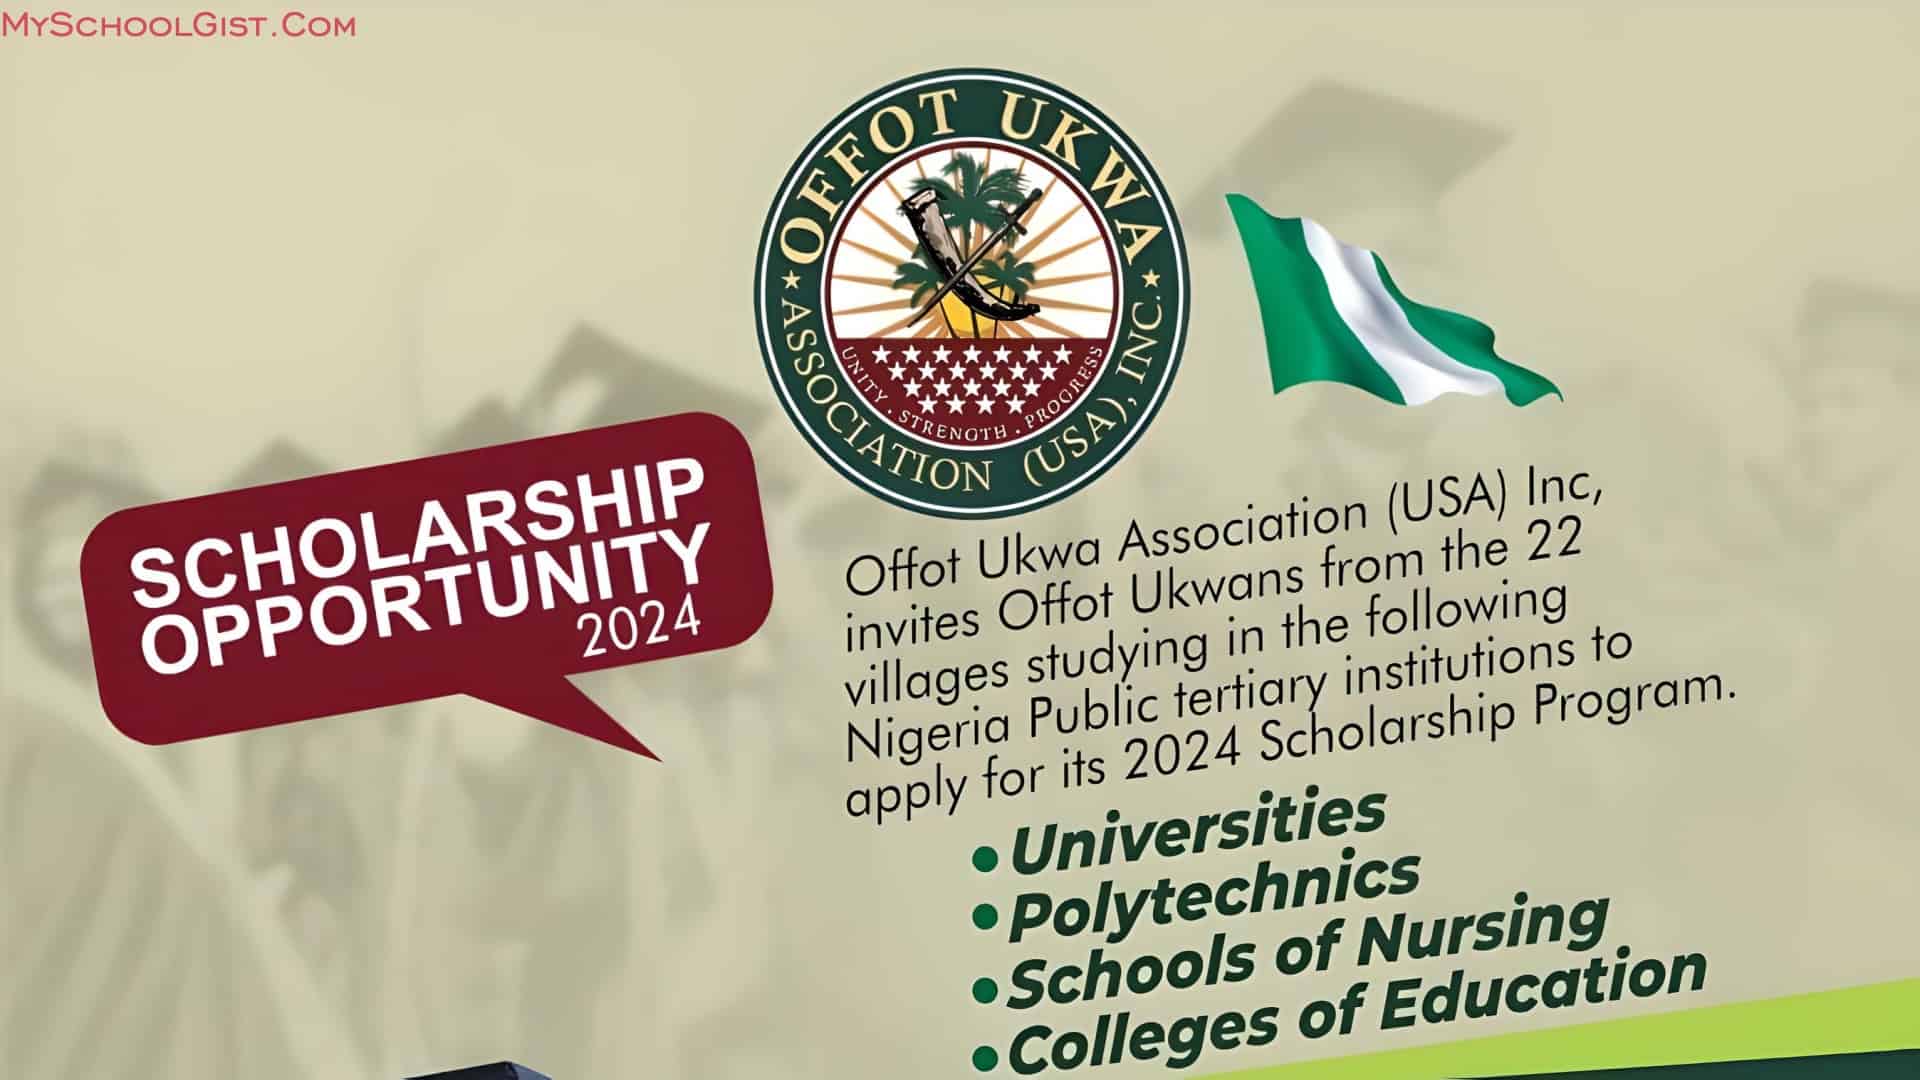 Offot Ukwa Association (USA) Inc Scholarship Program